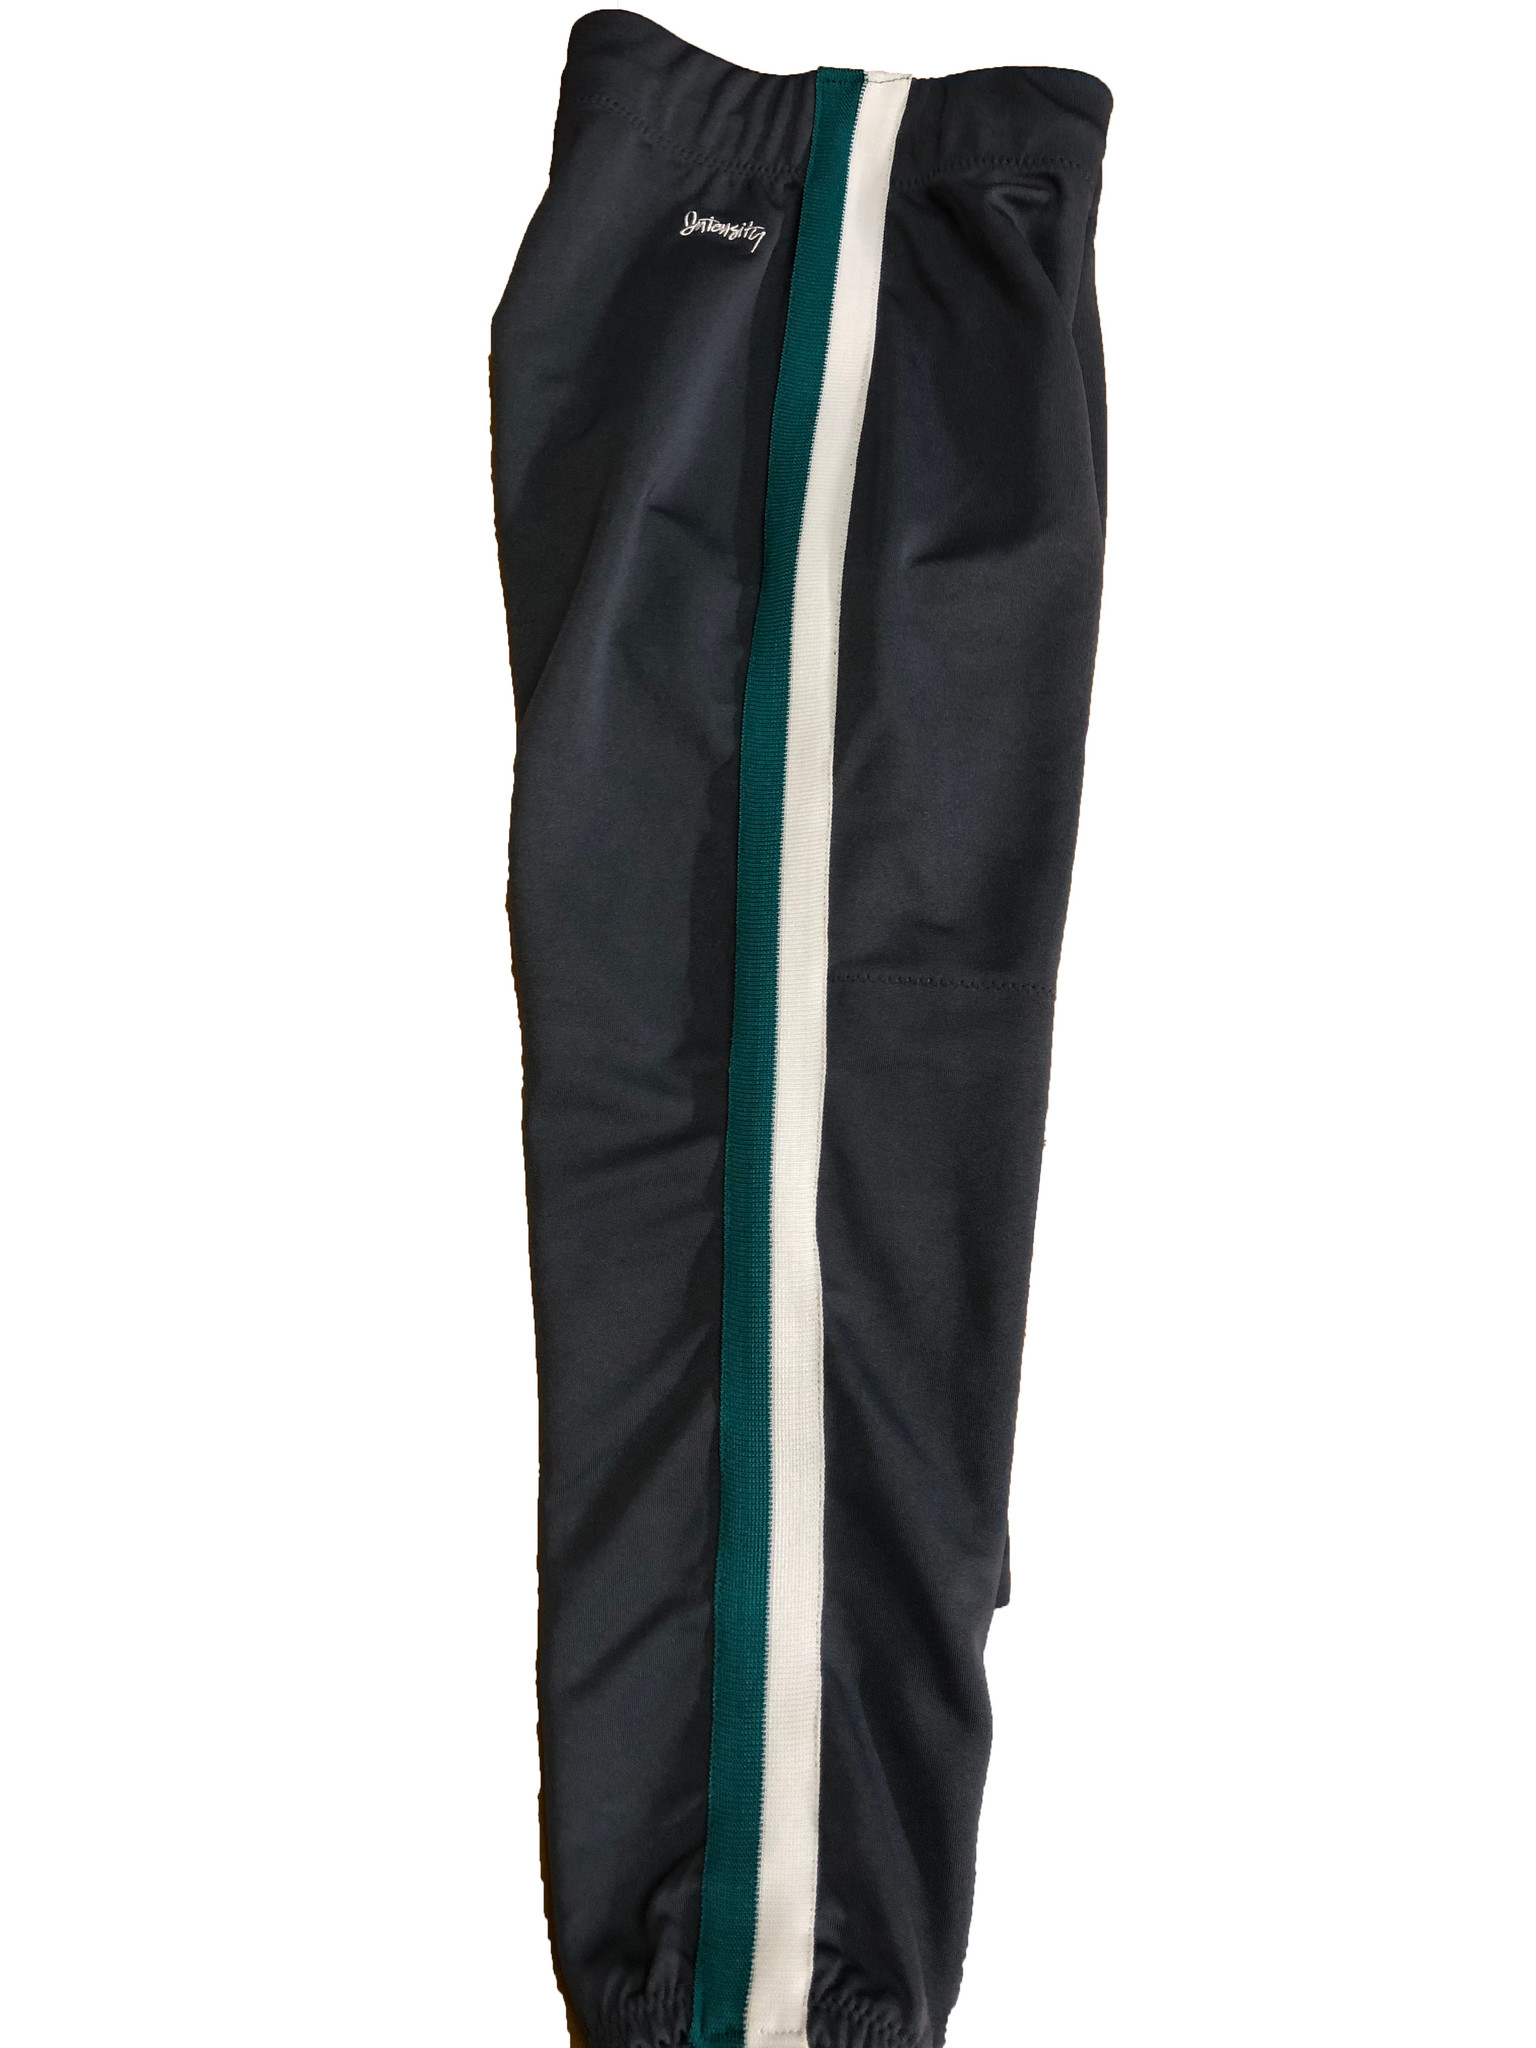 Adidas Originals X Danielle Cathari Track Pants Womens Sz 3X Power Berry  New $90 | eBay